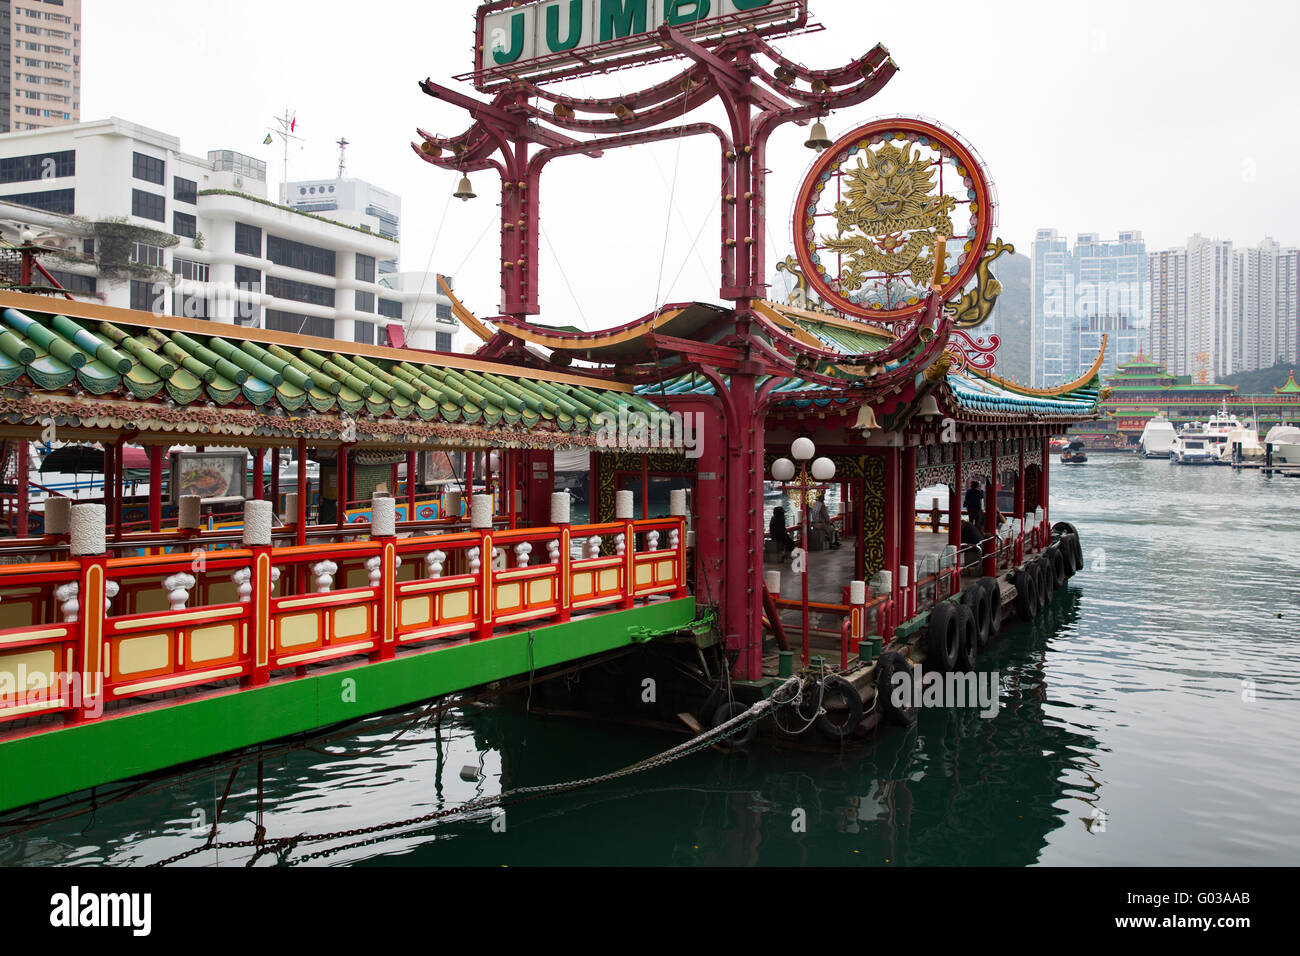 Restaurant Jumbo jetée flottante à Hong Kong Banque D'Images